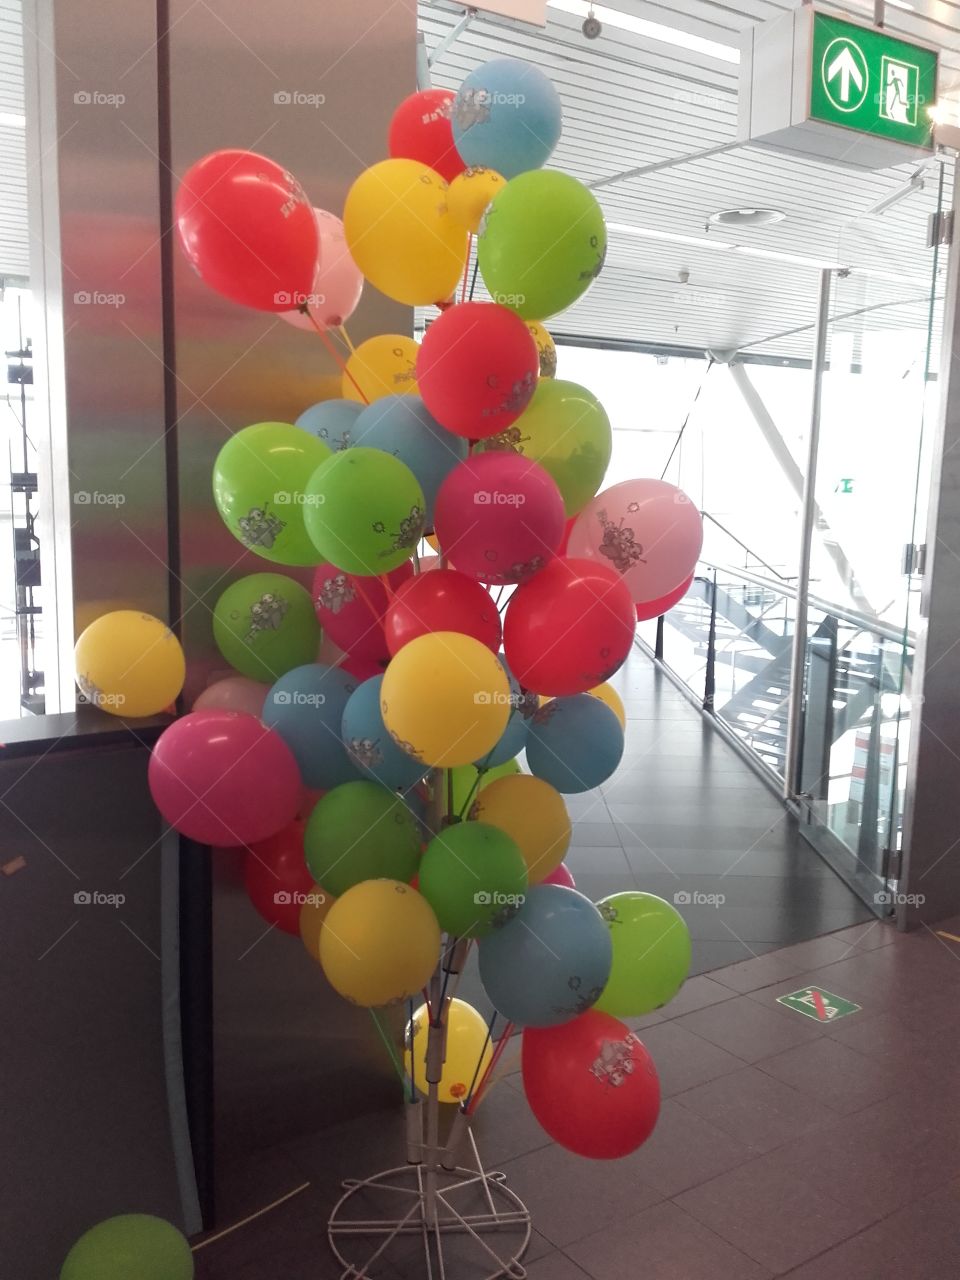 Happy Balloons hanging